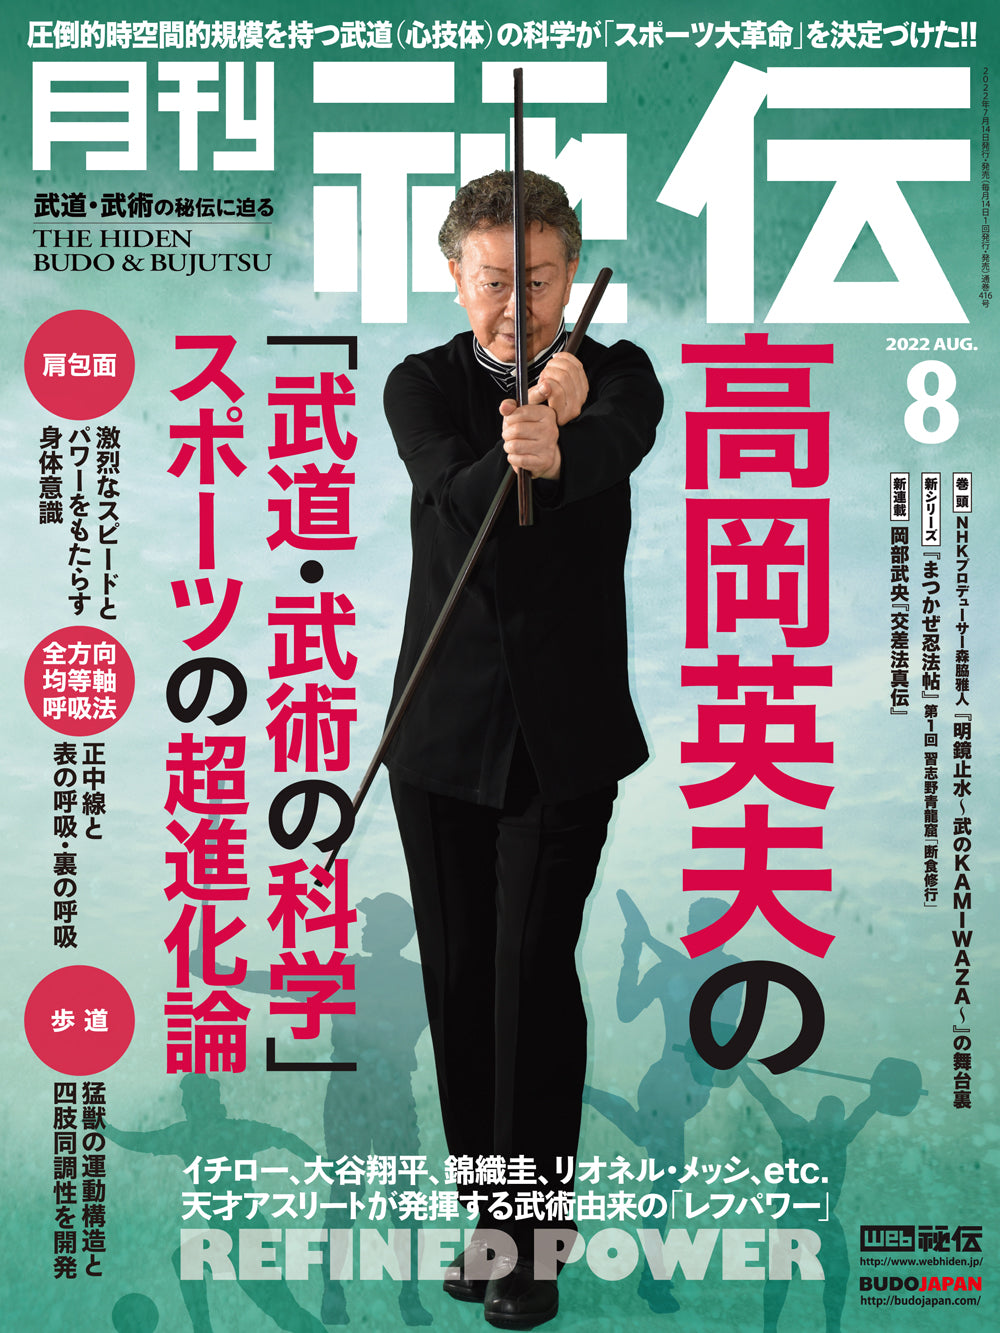 Hiden Budo & Bujutsu Magazine August 2022